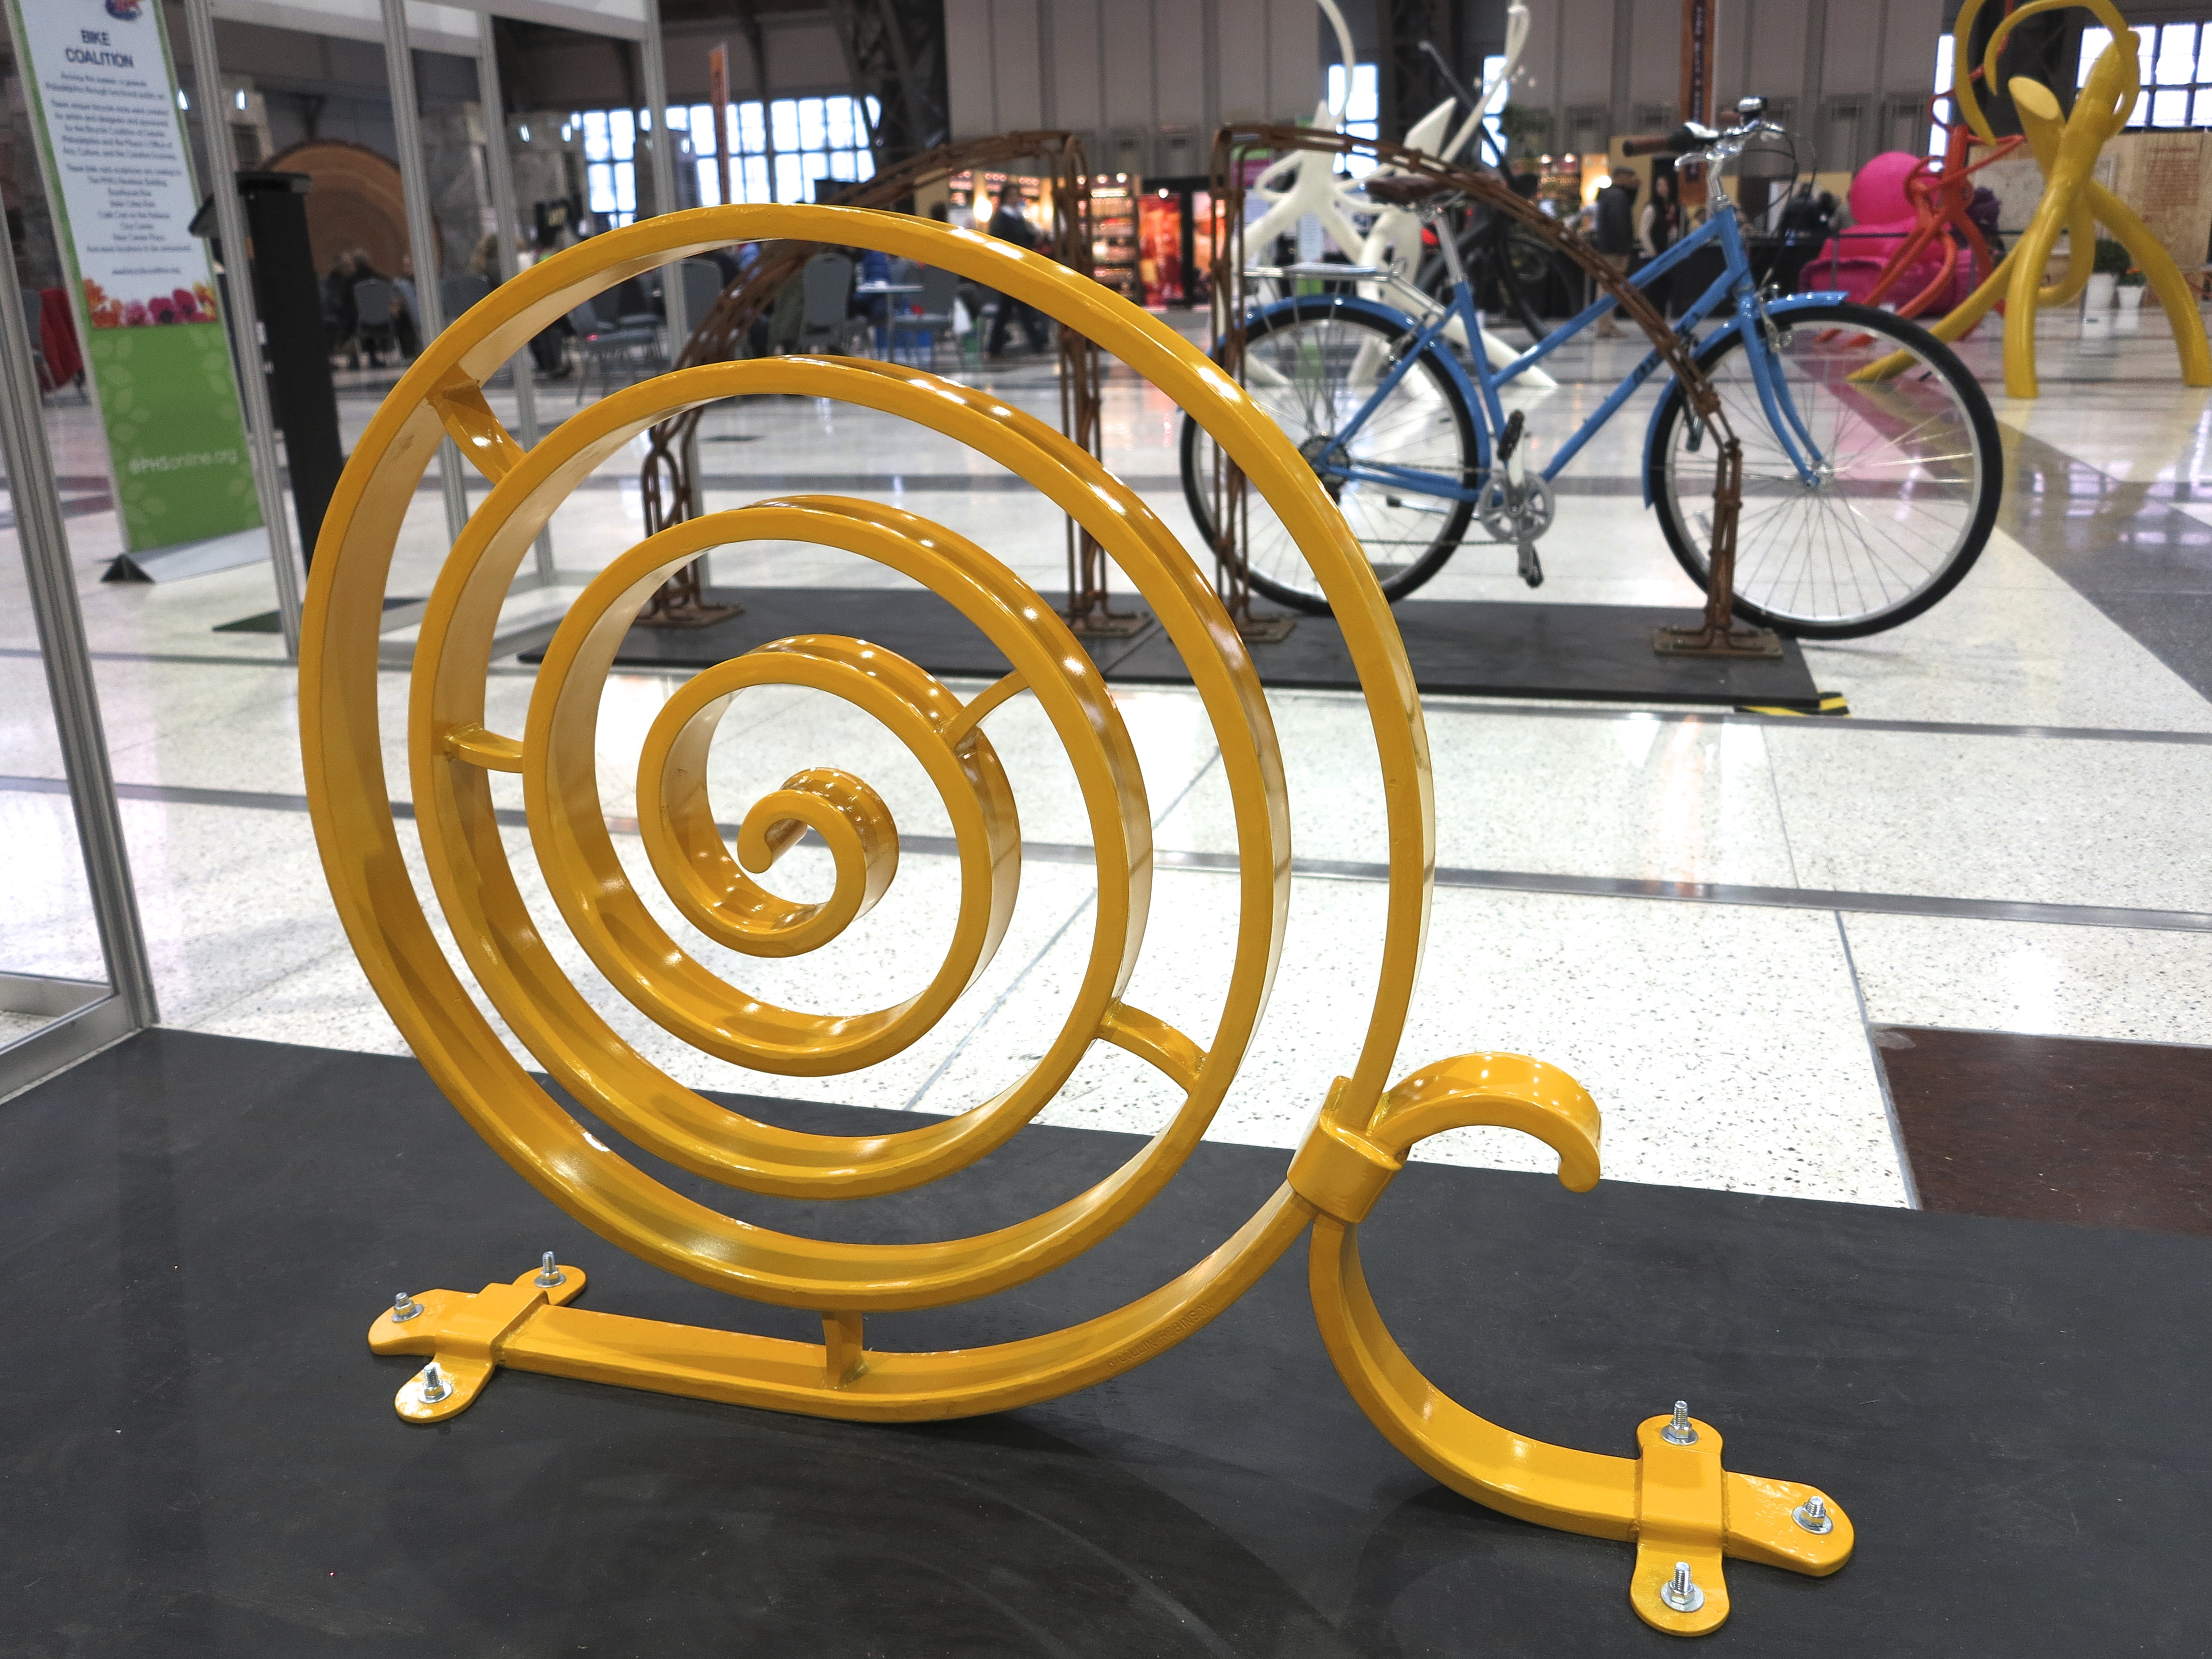 Spiral Bike Rack, by Collin Robinson (location: PMA's Perelman Building)